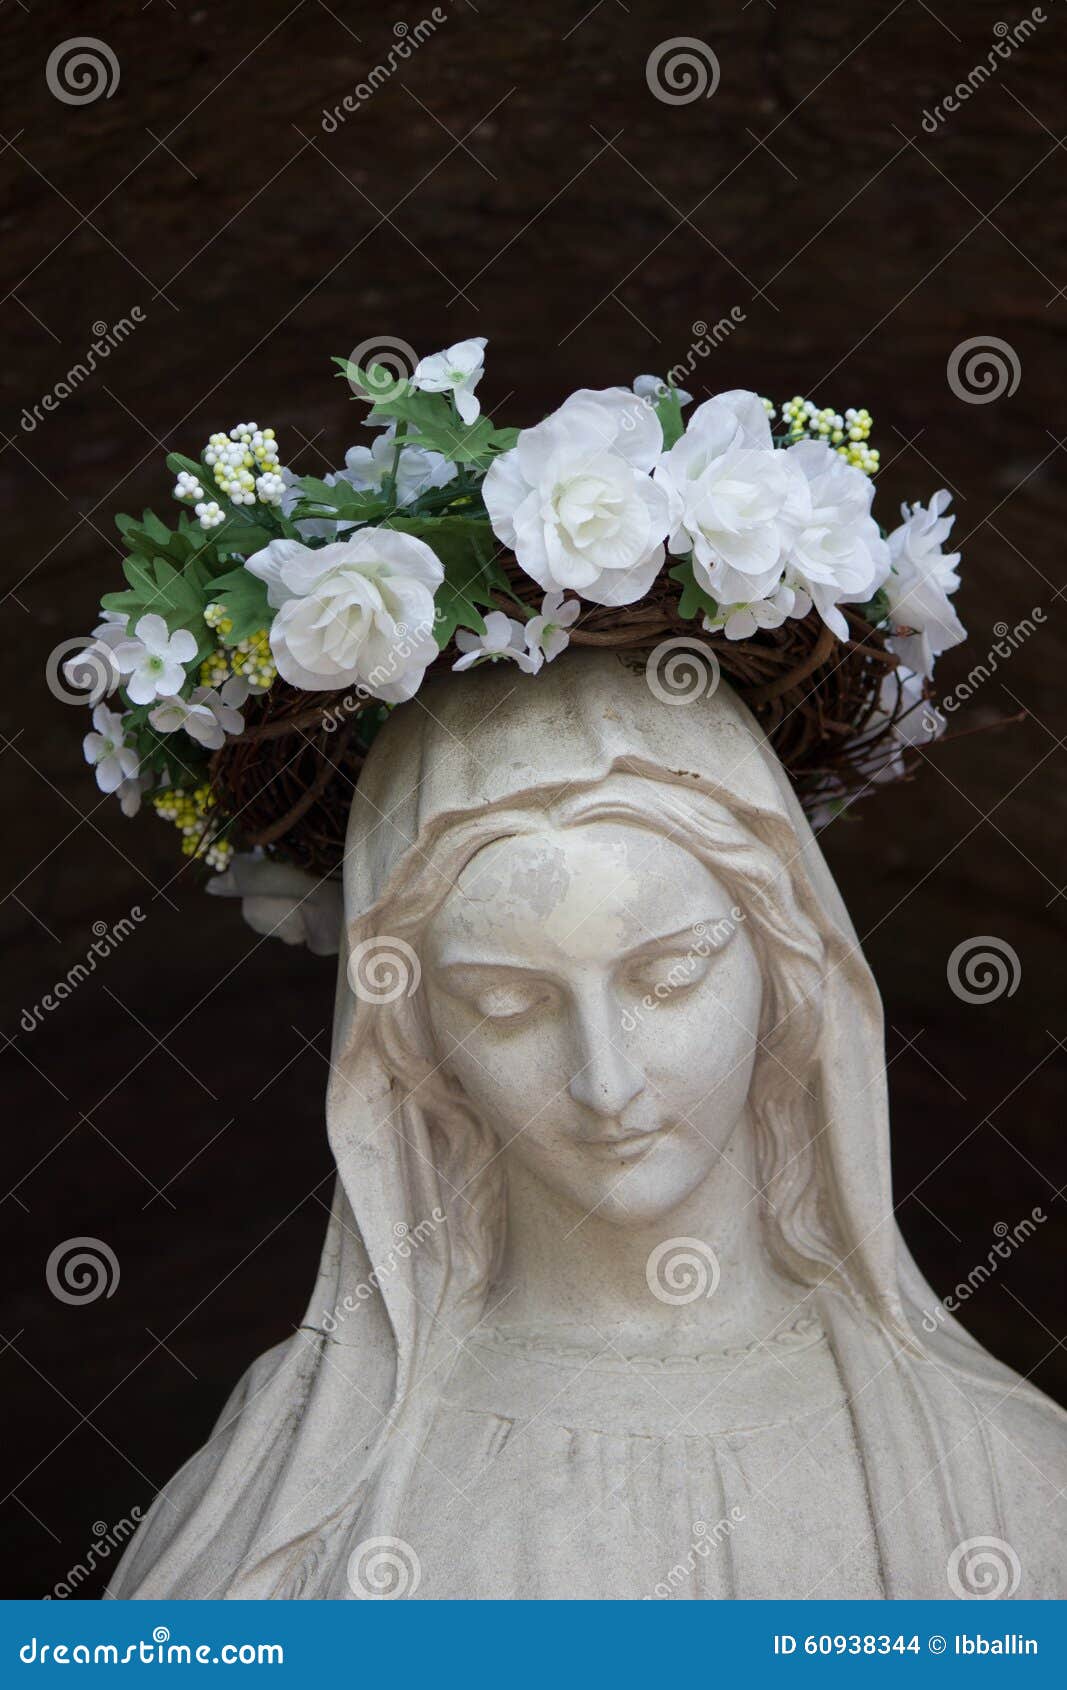 1,631 Virgin Mary Flowers Stock Photos - Free & Royalty-Free Stock ...